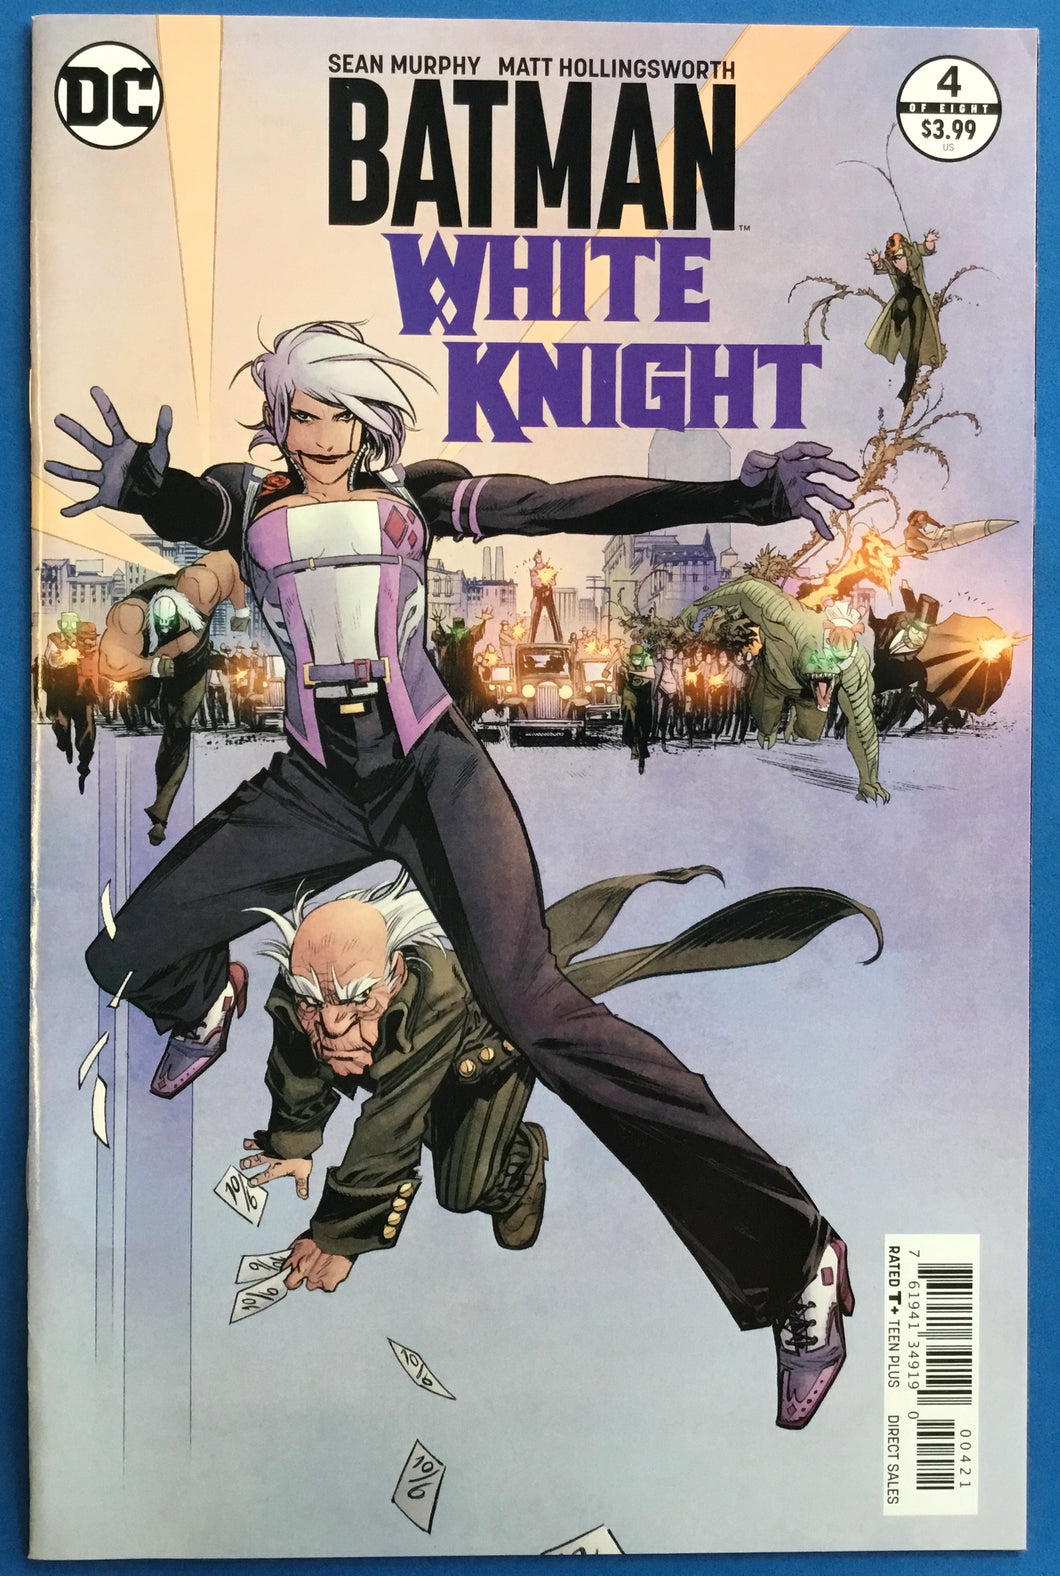 Batman: White Knight No. #4 2018 Variant Cover DC Comics